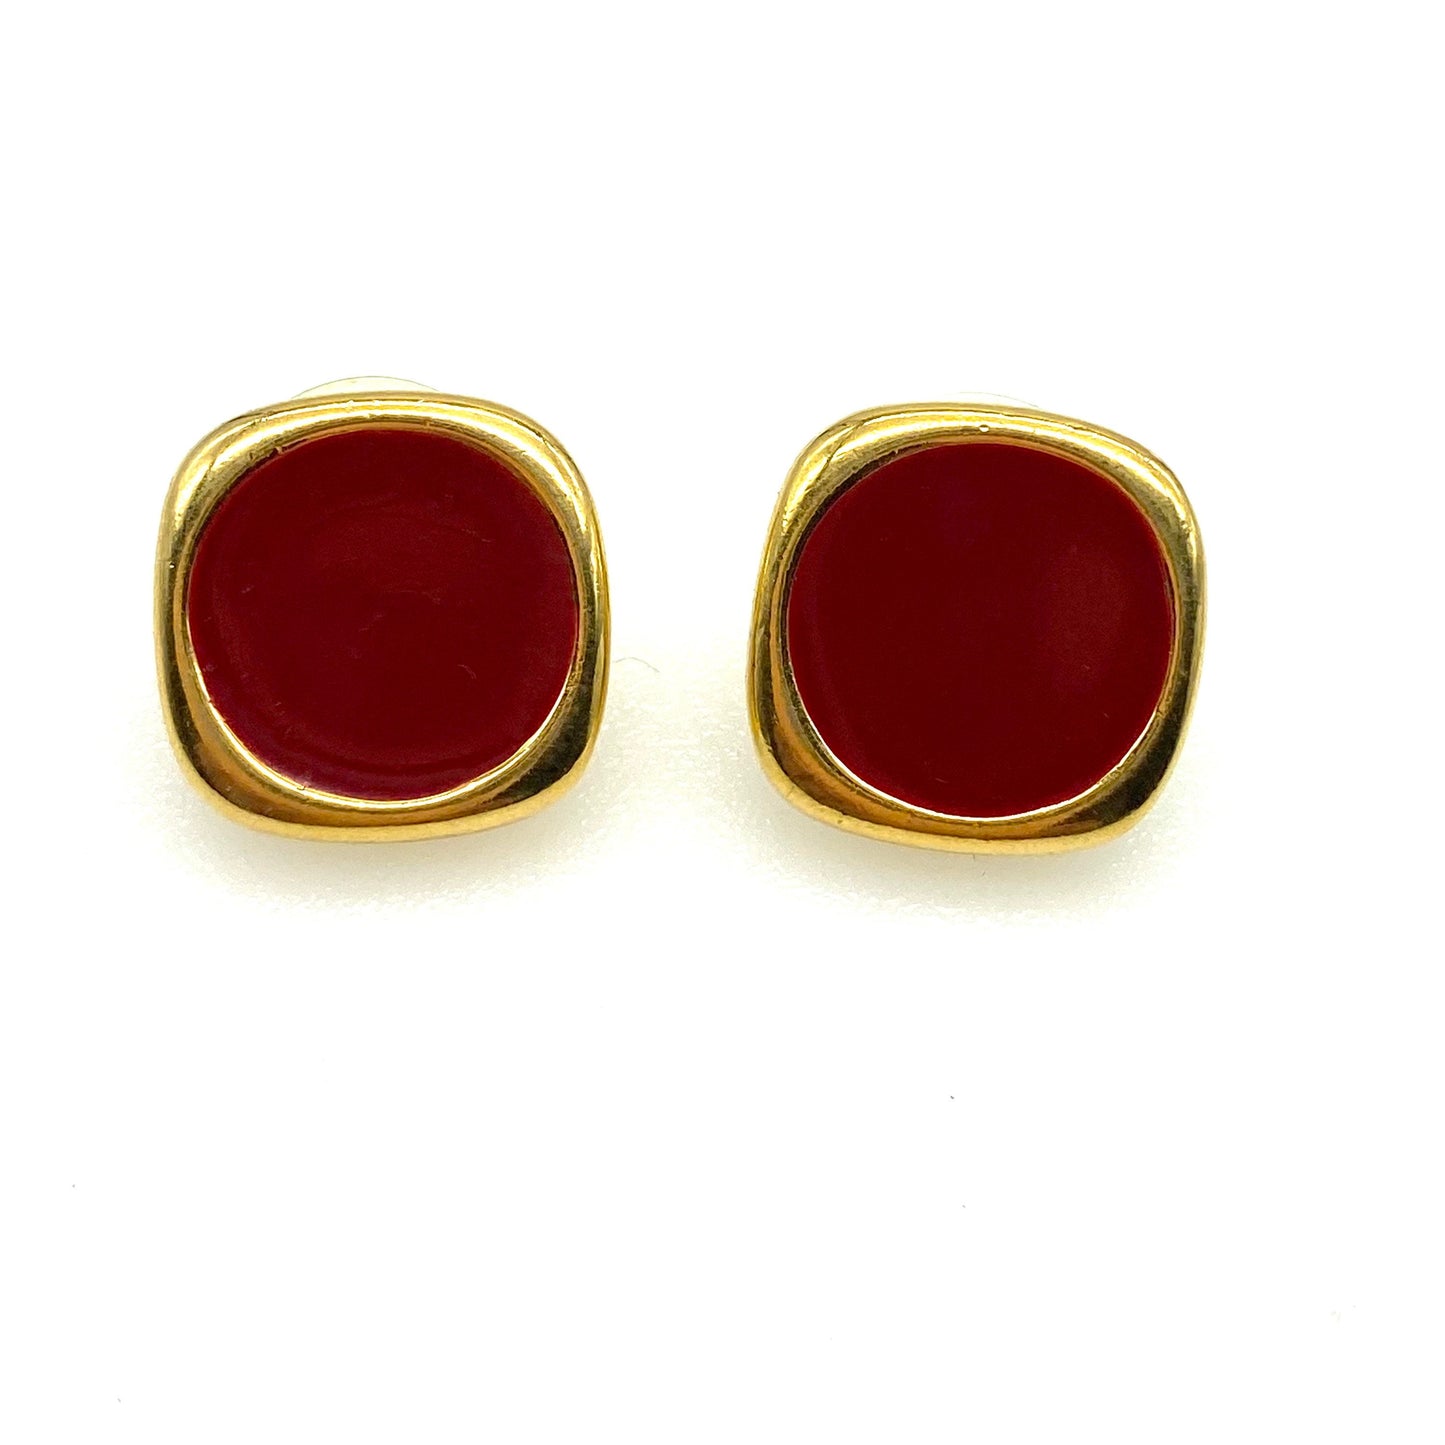 Napier Blood Red Enamel Pierced Earrings with the Original Backs